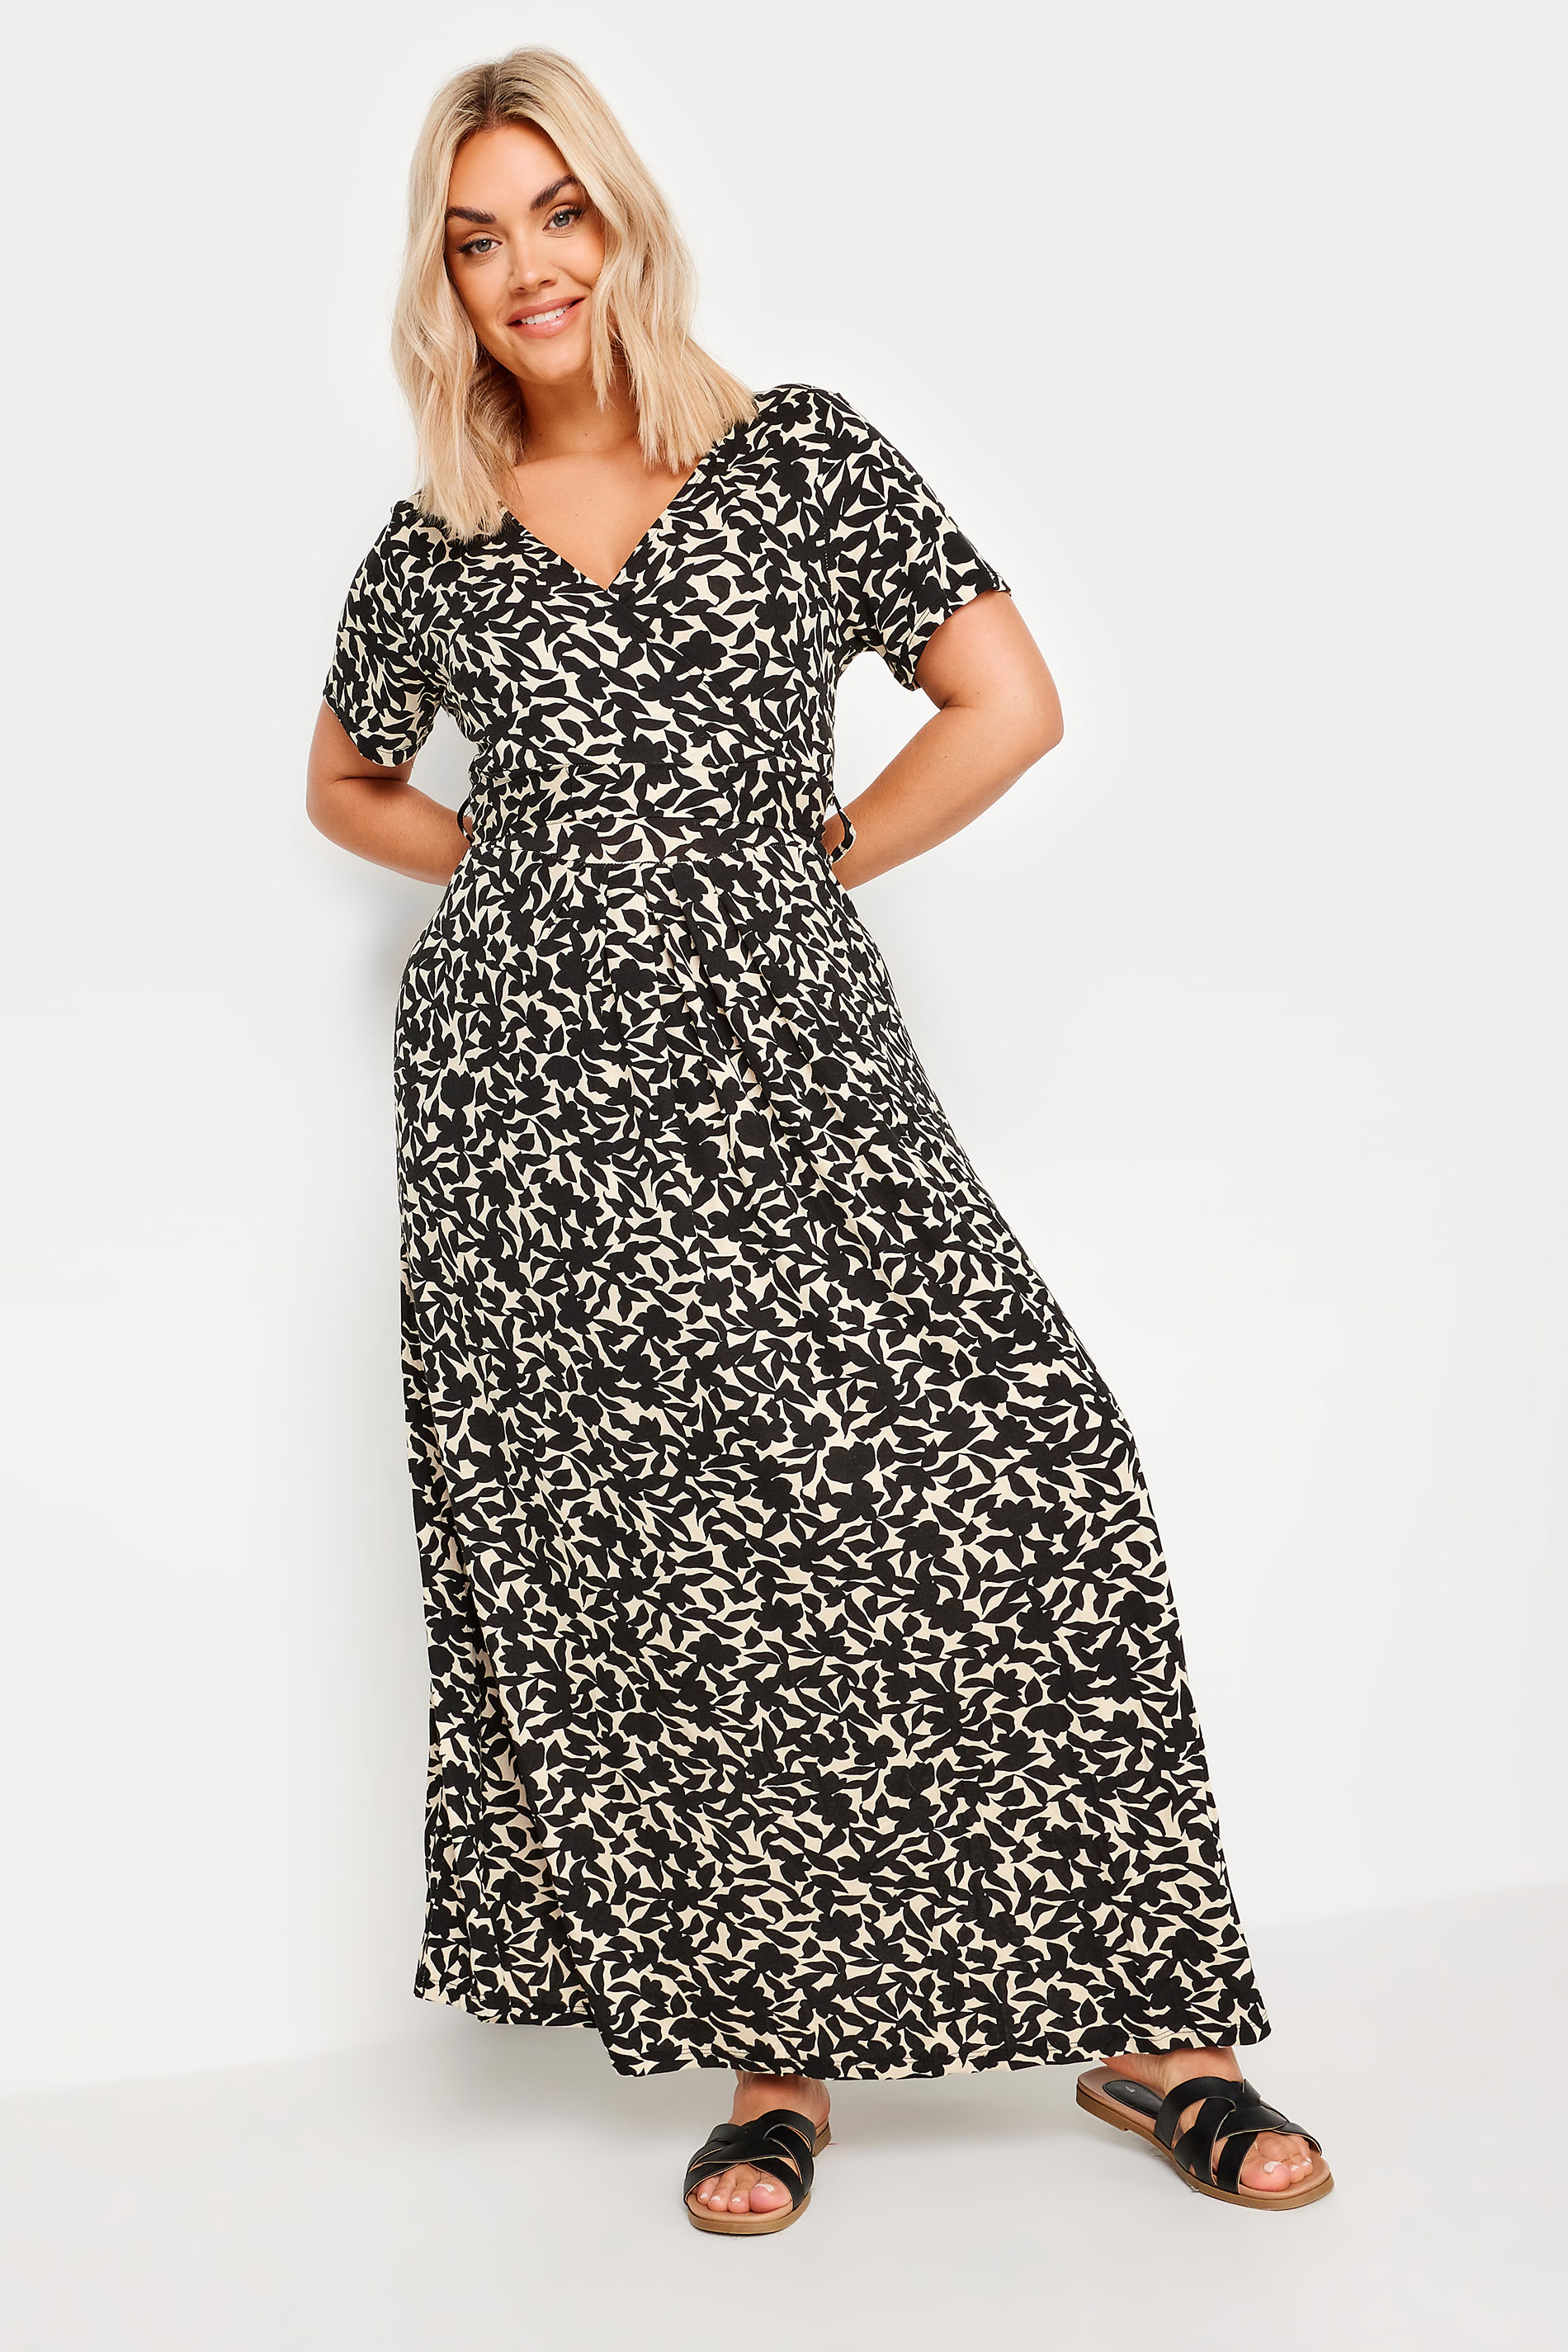 YOURS Plus Size Black Floral Print Wrap Maxi Dress | Yours Clothing 2